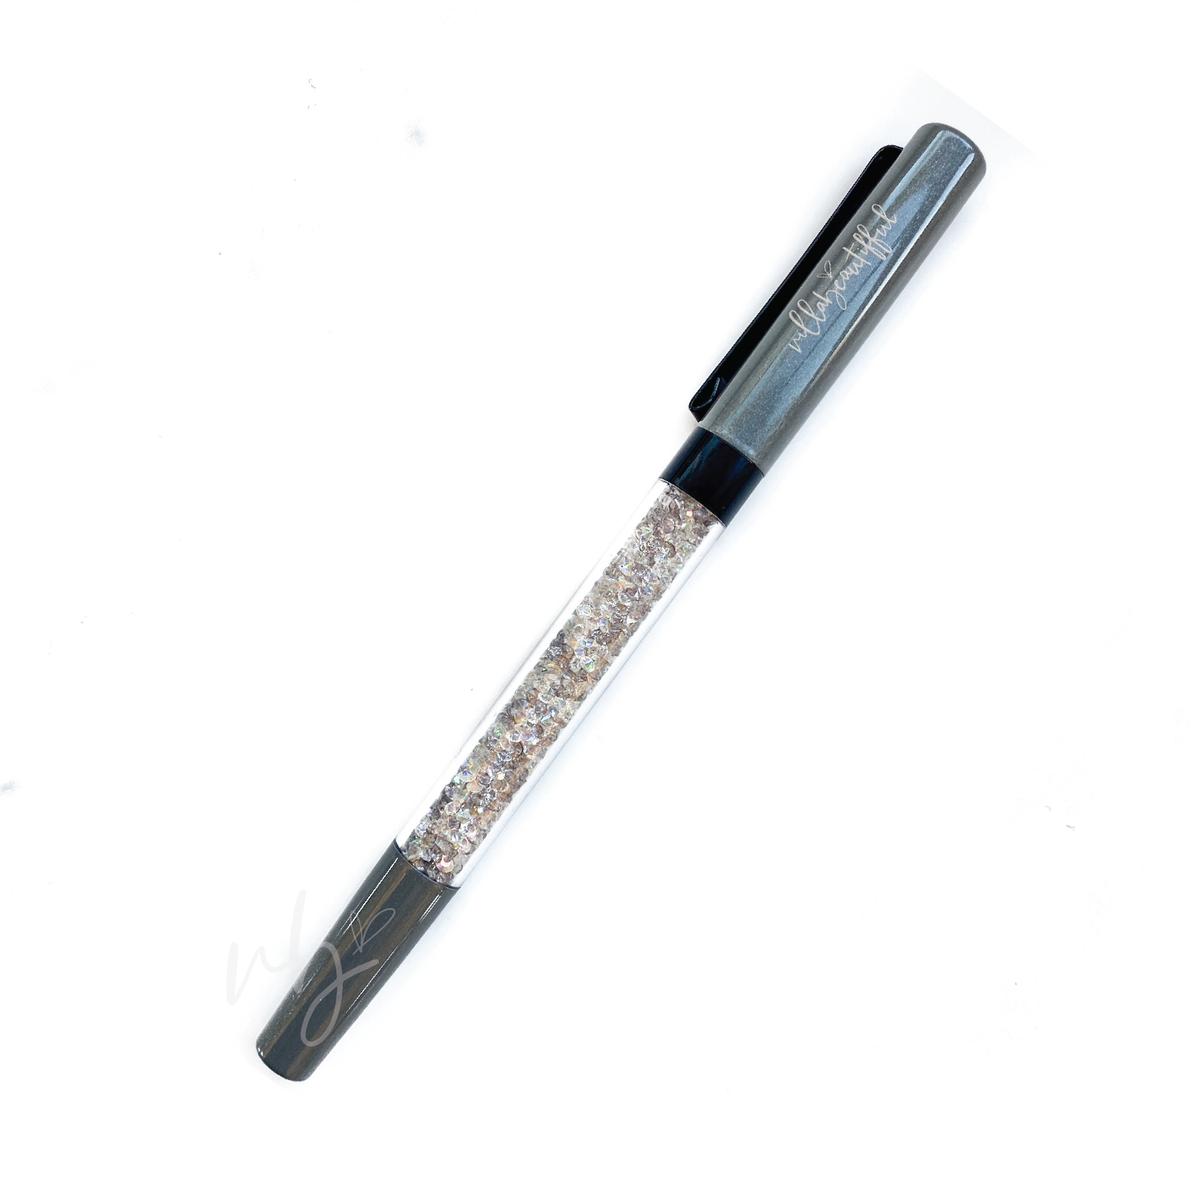 Mysterious Crystal VBPen | limited kit pen